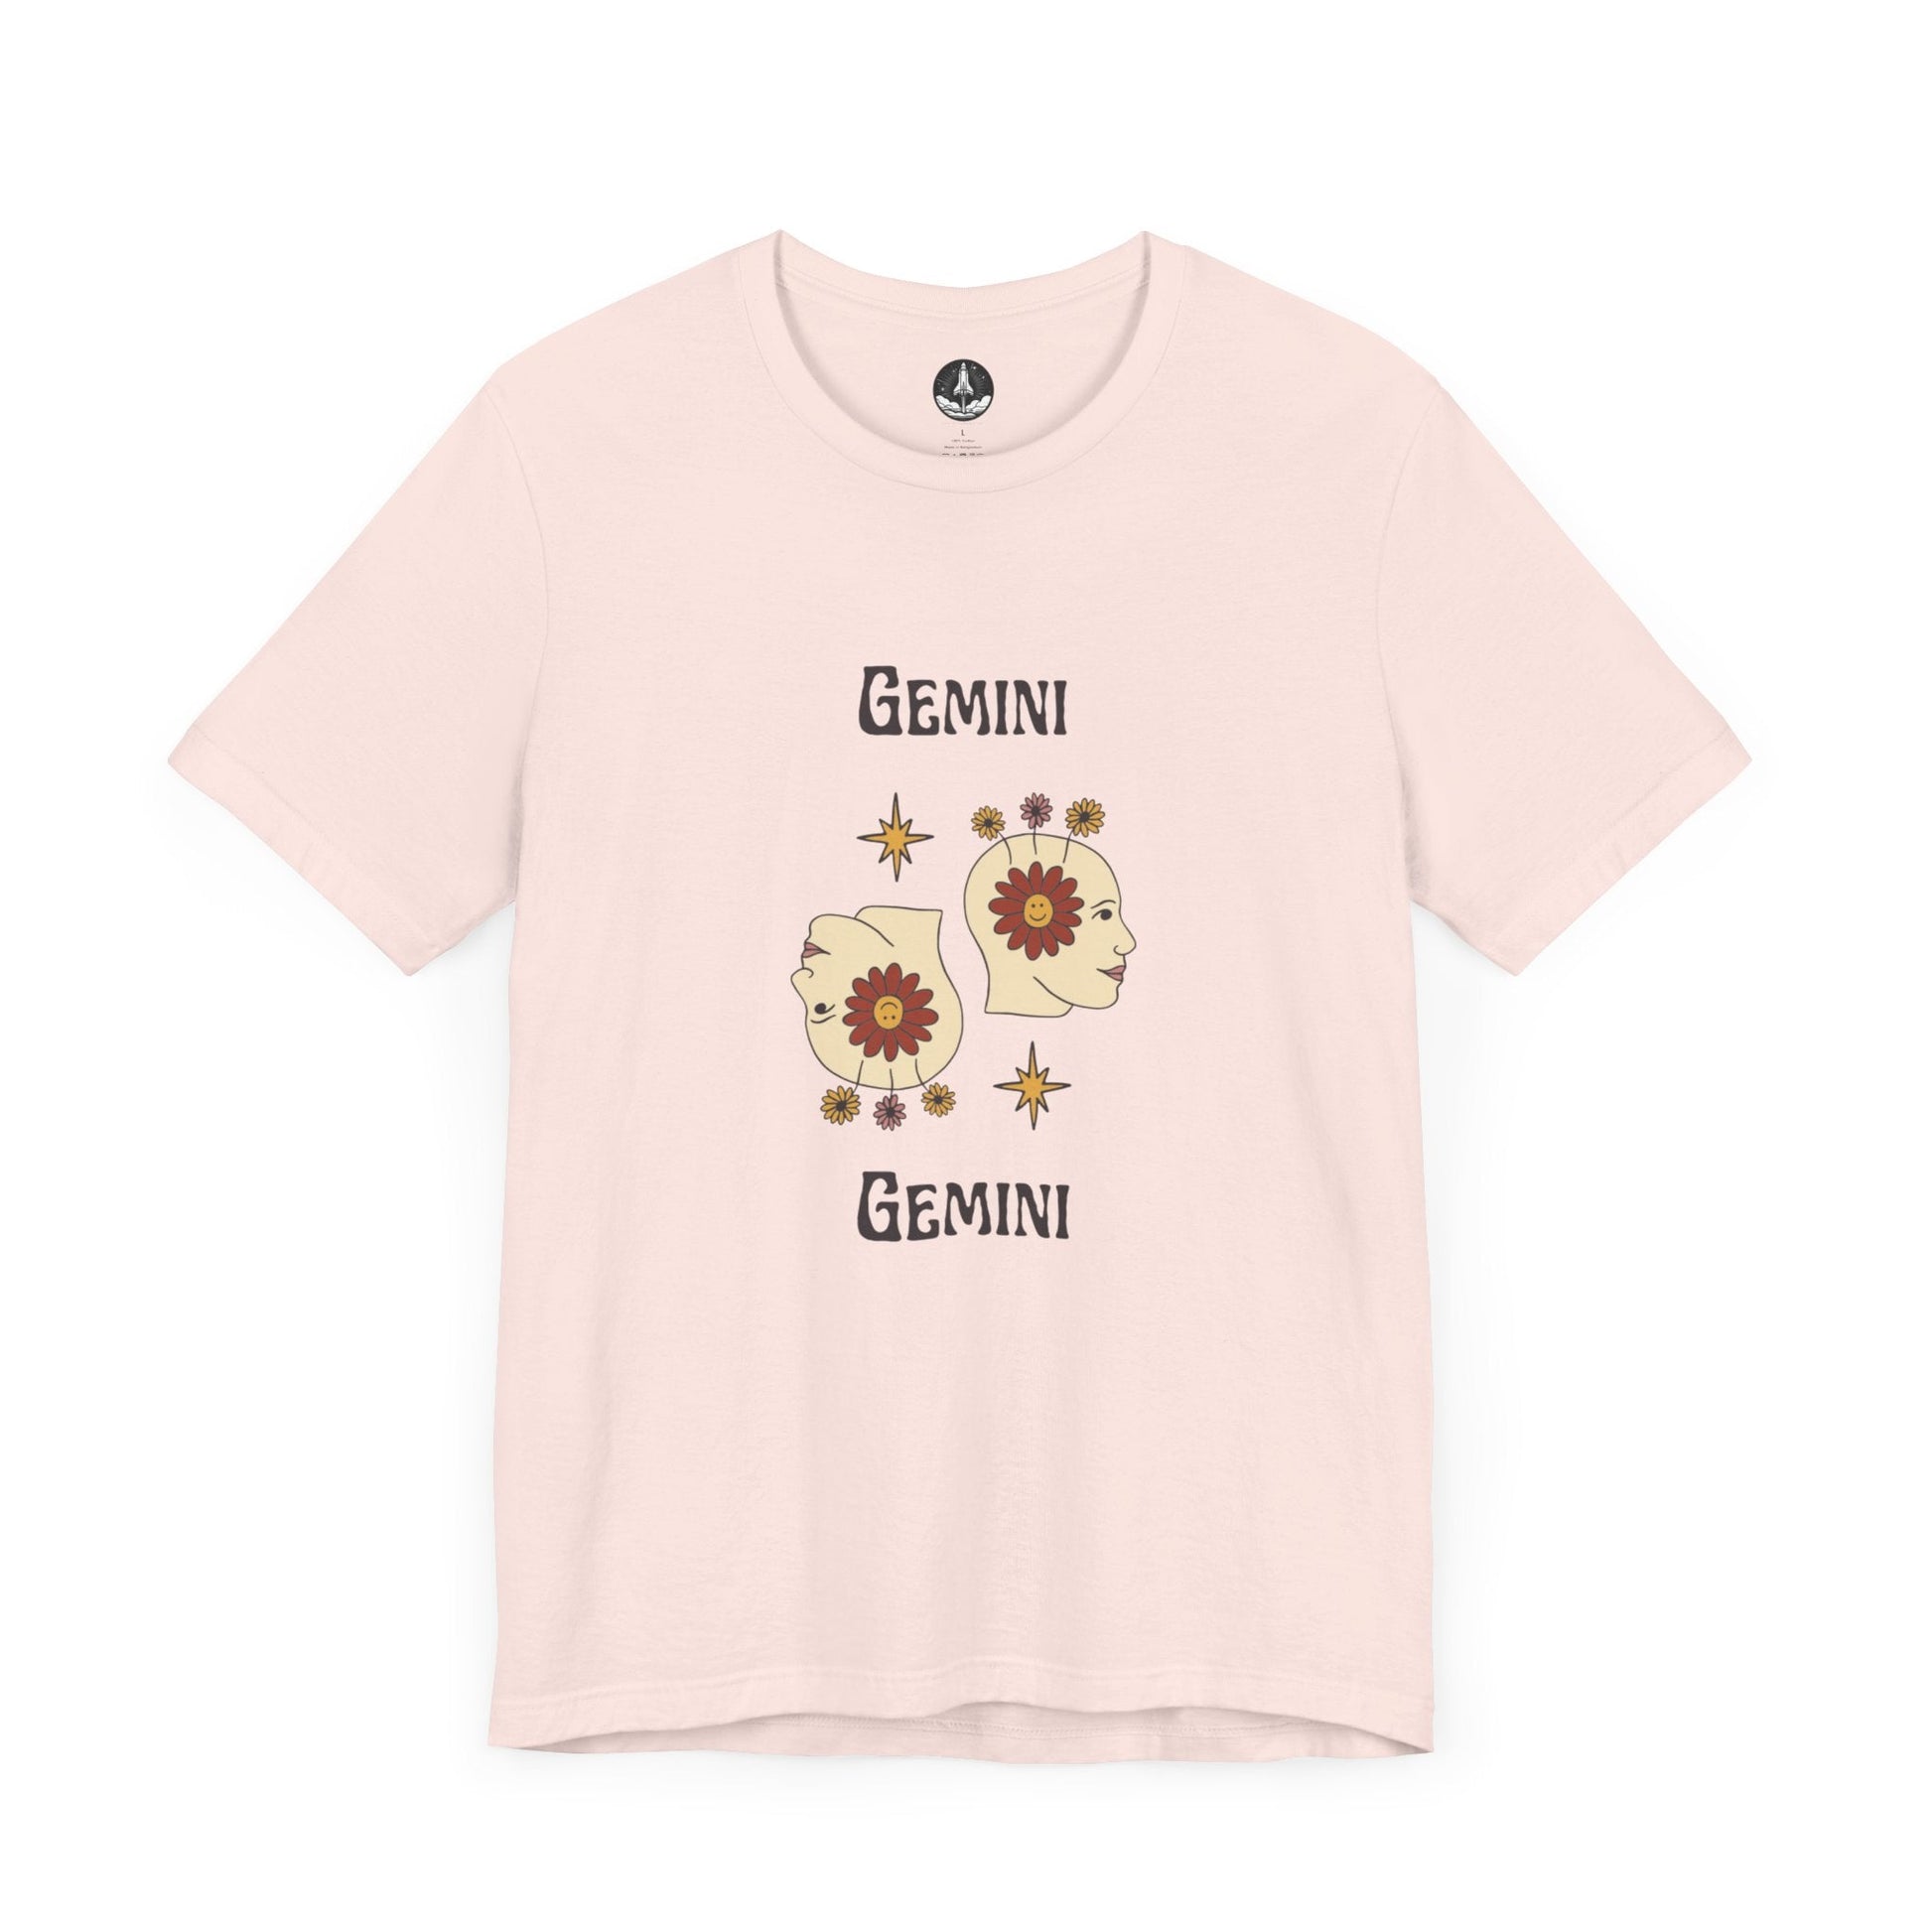 T-Shirt Soft Pink / S Gemini Flower Power T-Shirt - Retro Zodiac Apparel for Astrology Lovers